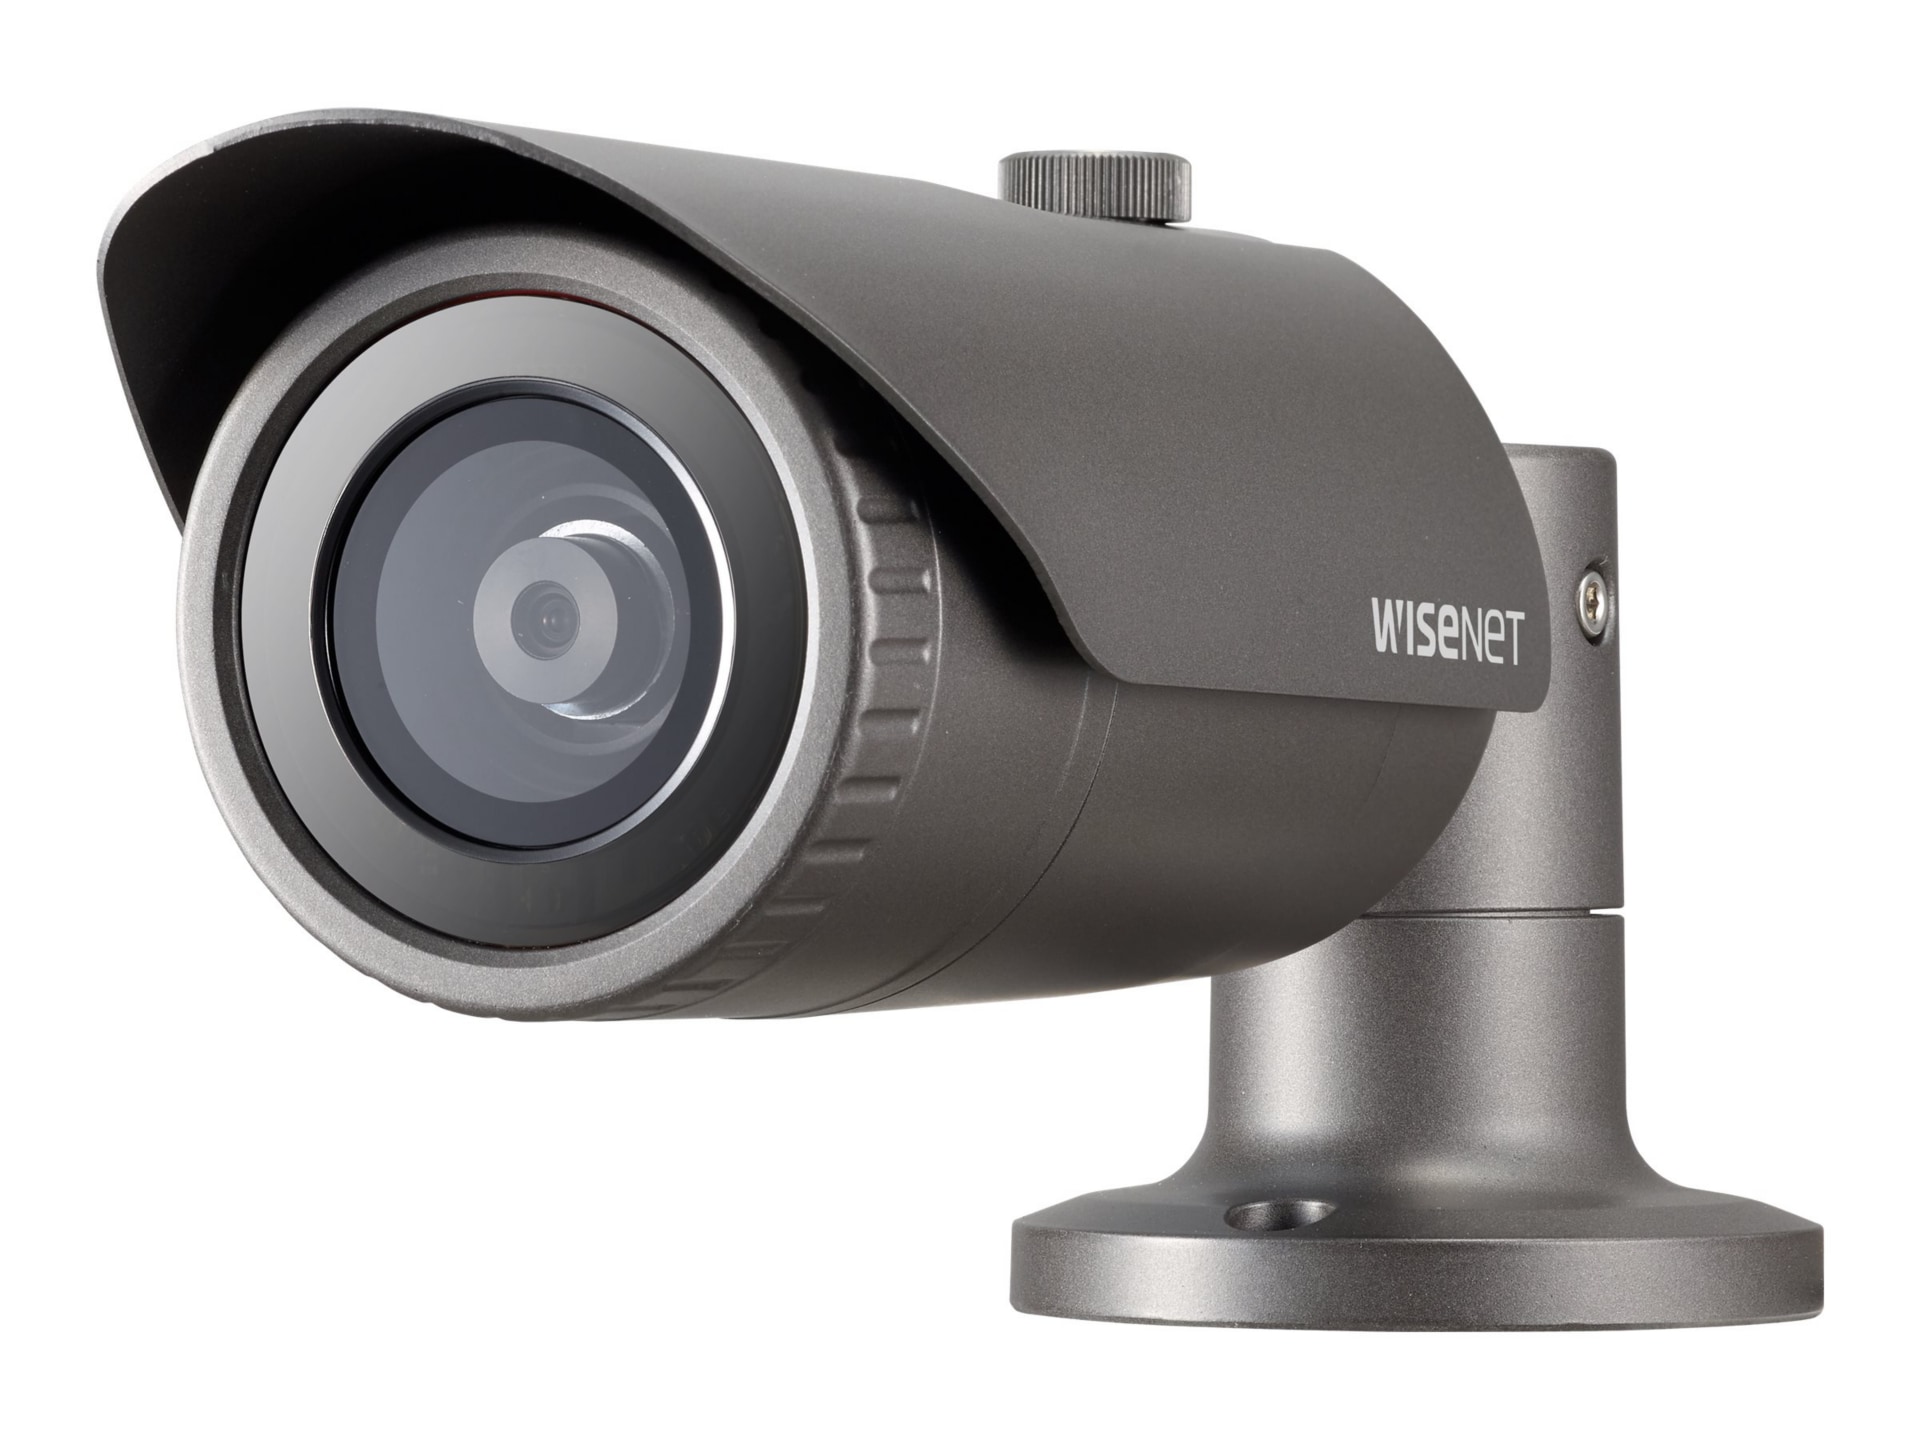 Hanwha Techwin WiseNet Q QNO-8010R - network surveillance camera